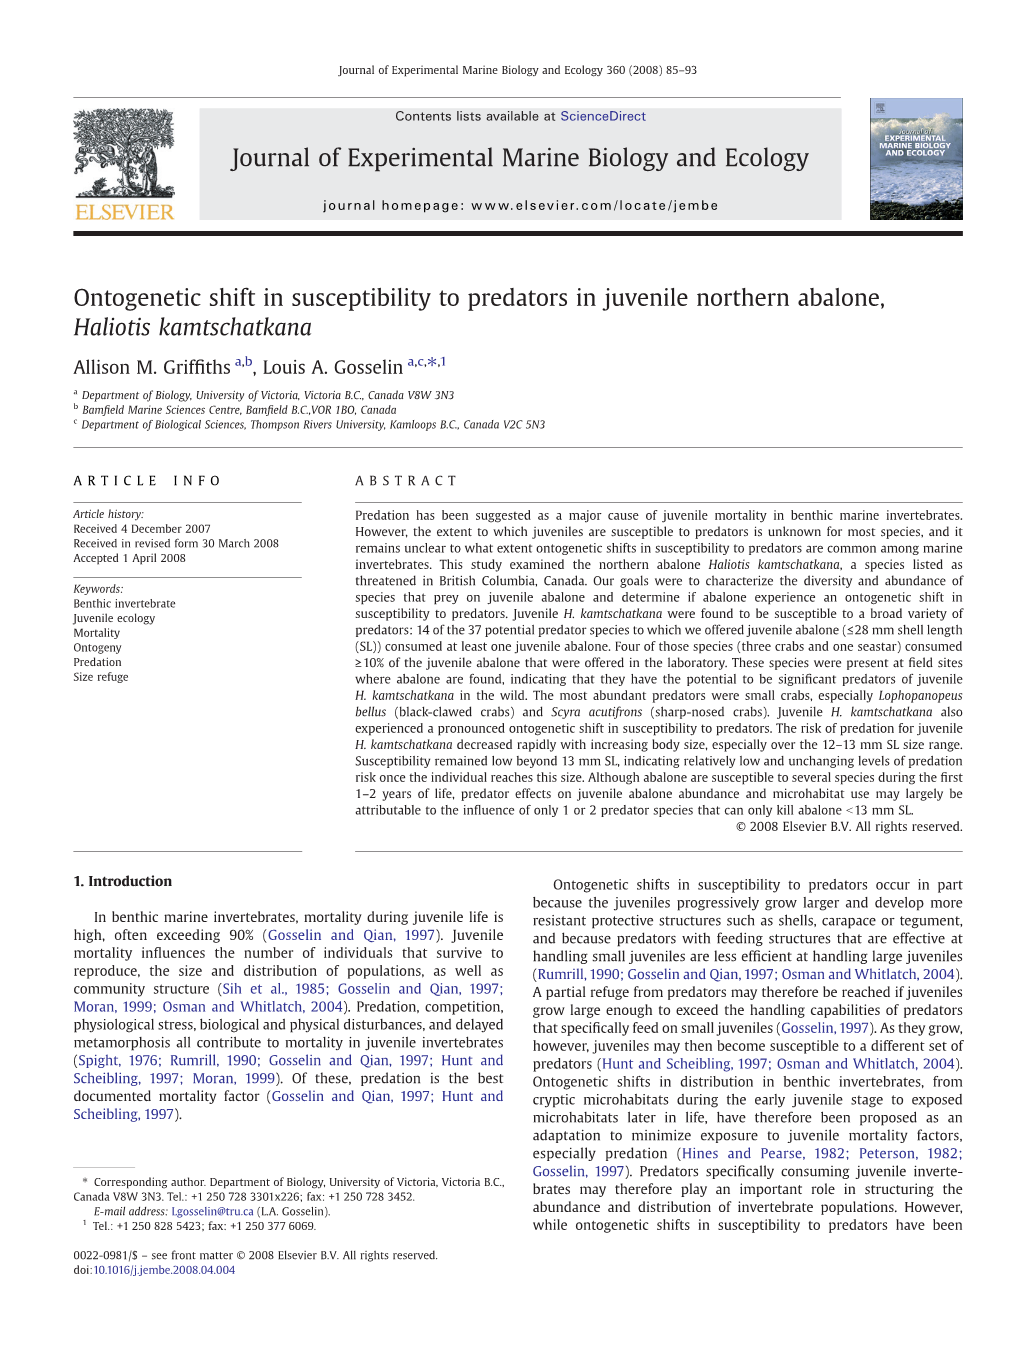 Ontogenetic Shift in Susceptibility to Predators in Juvenile Northern Abalone, Haliotis Kamtschatkana